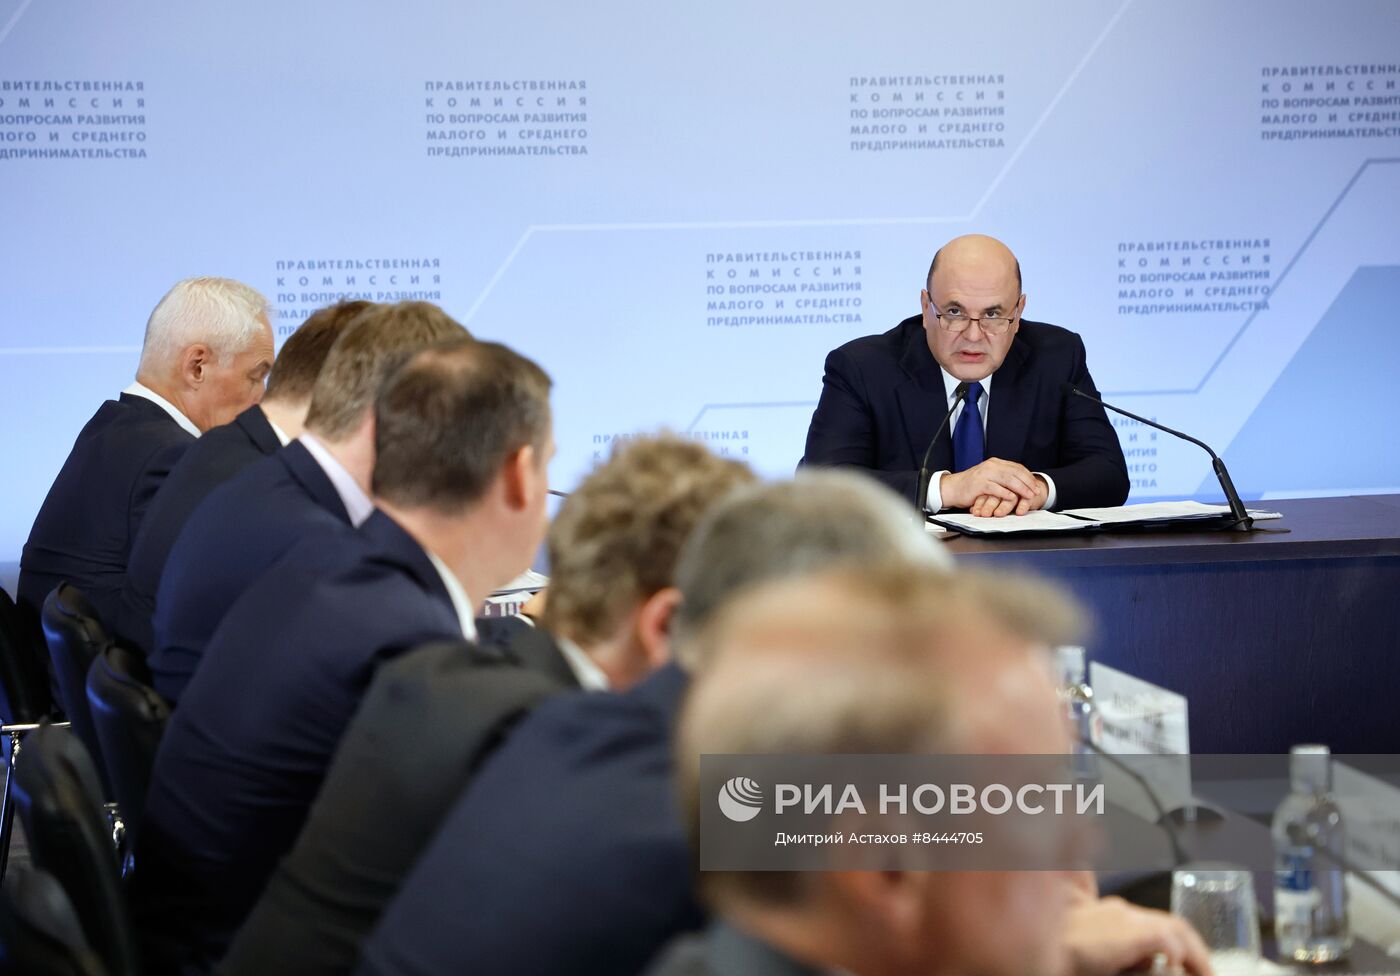 Премьер-министр РФ М. Мишустин посетил технопарк "Калибр"